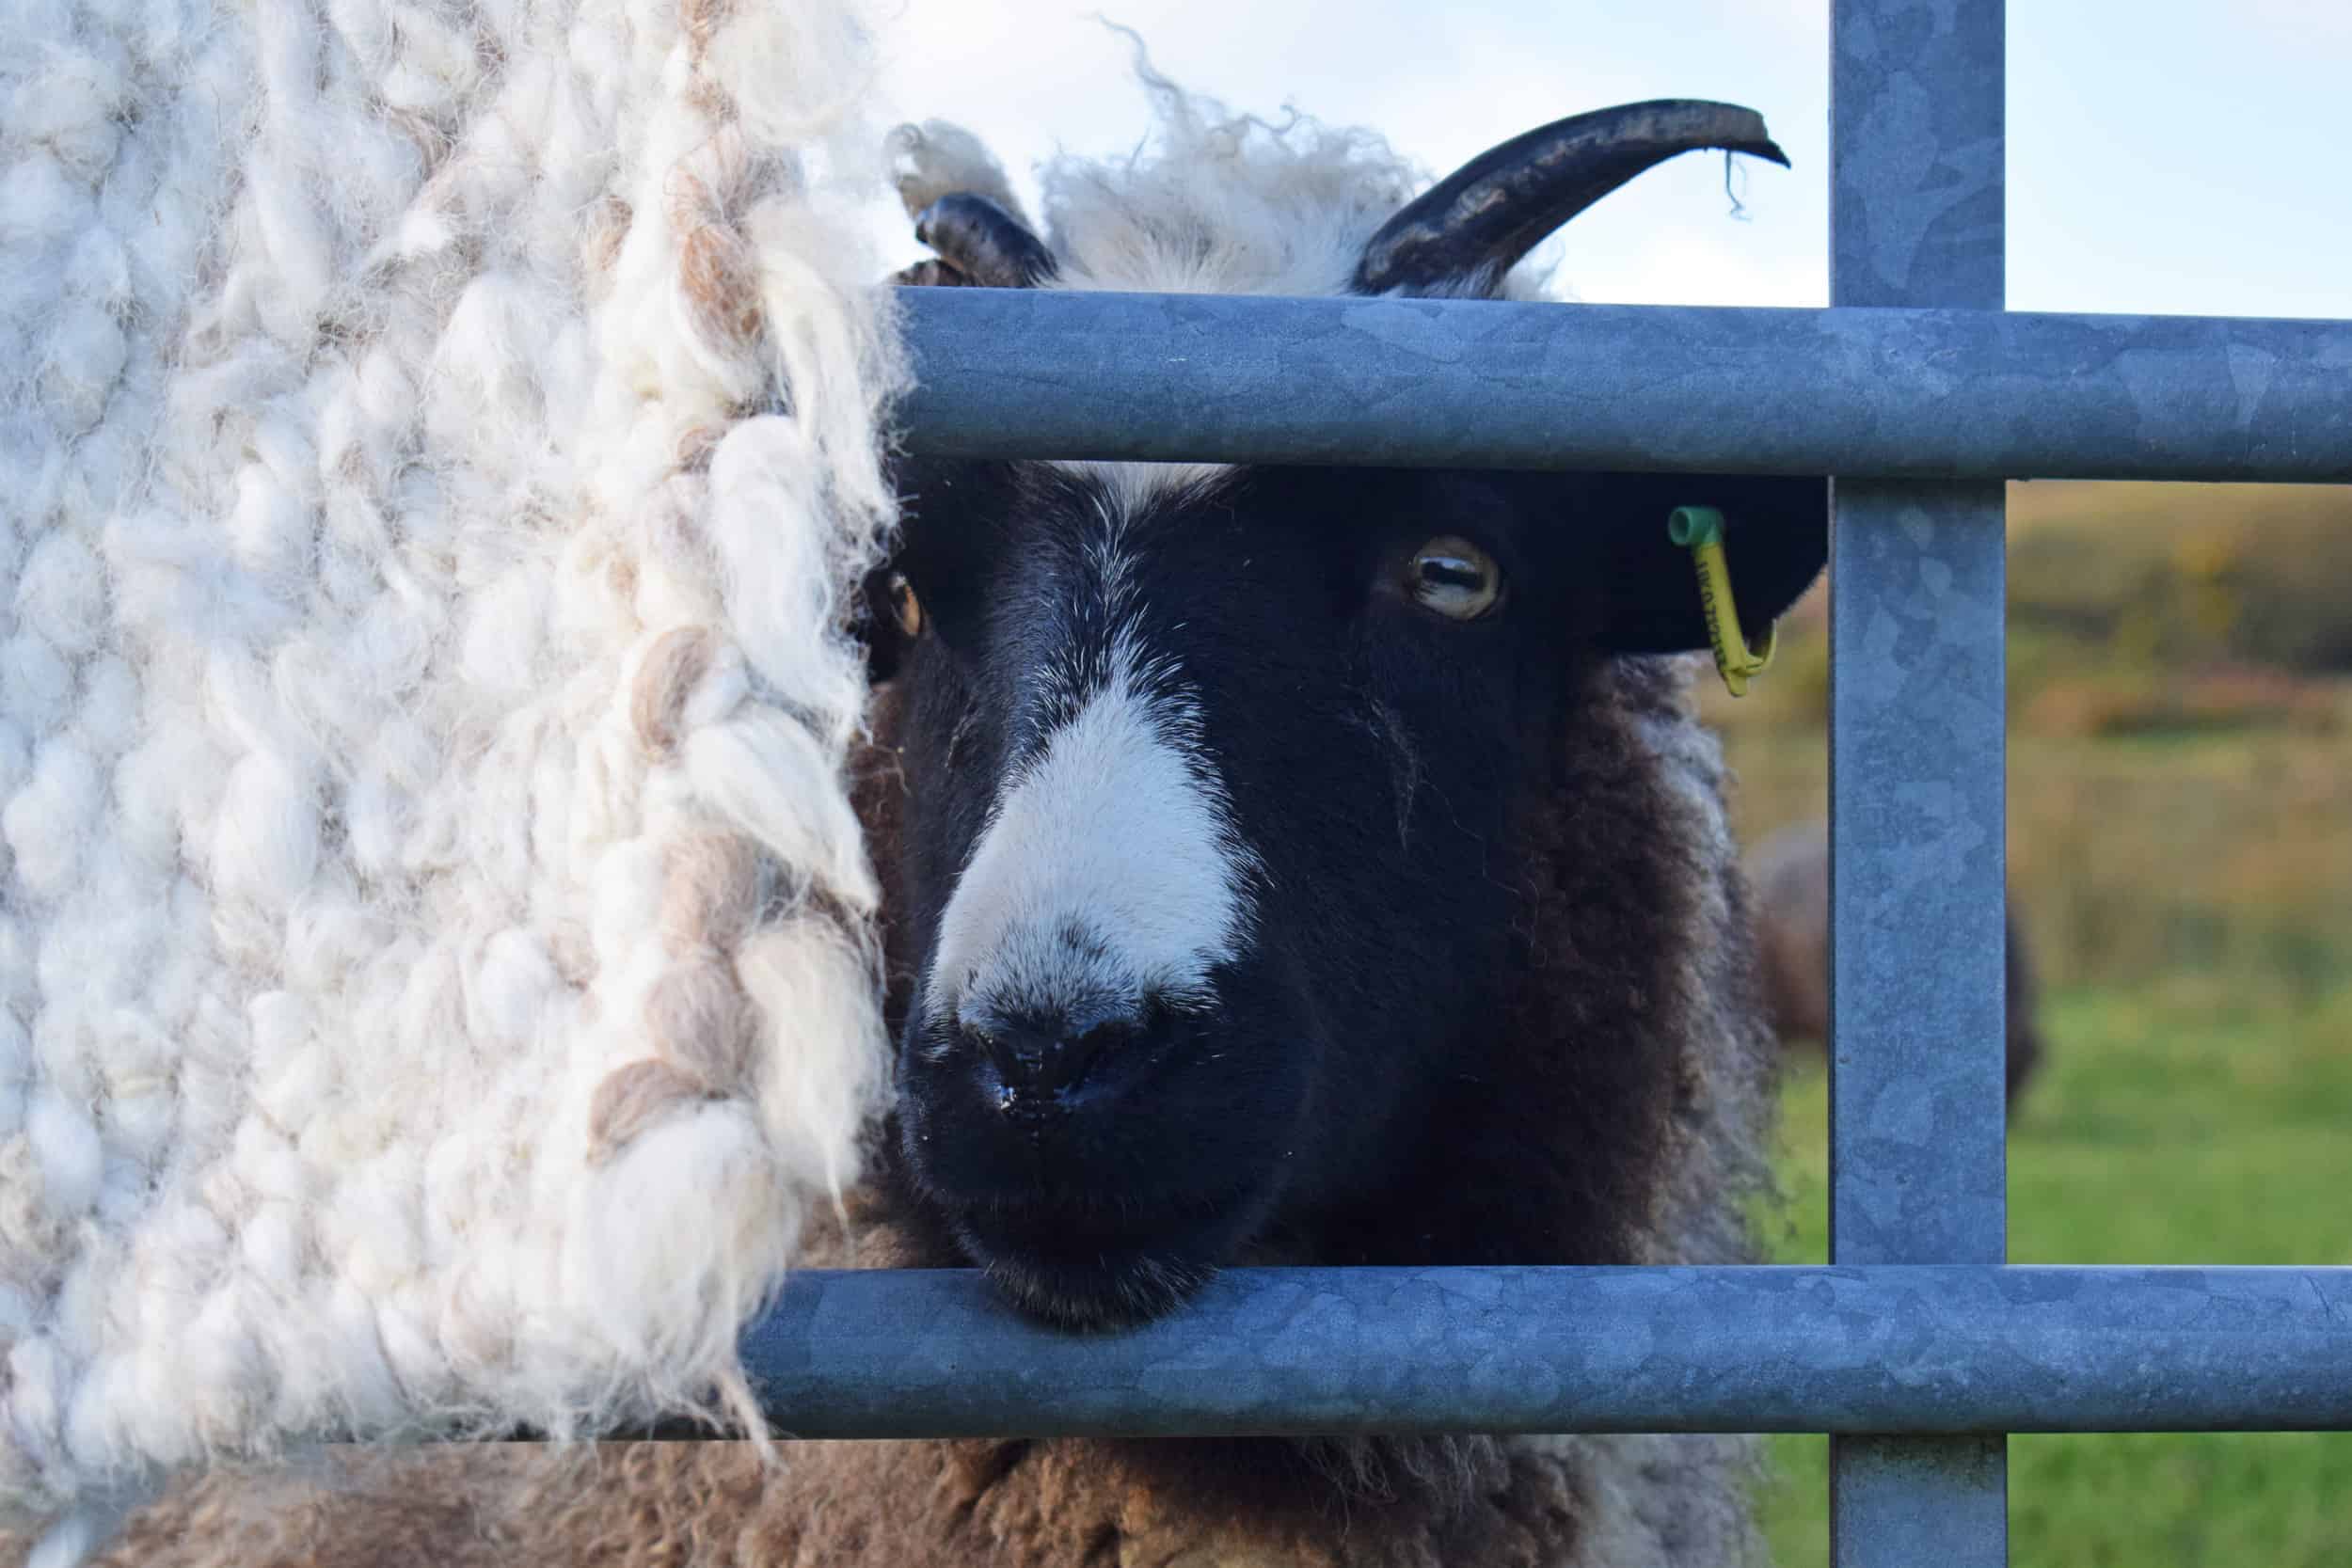 Holly pegloom pet lamb sheep jacob cross shetland spotted black grey white wales gwynedd british wool gifts homeware